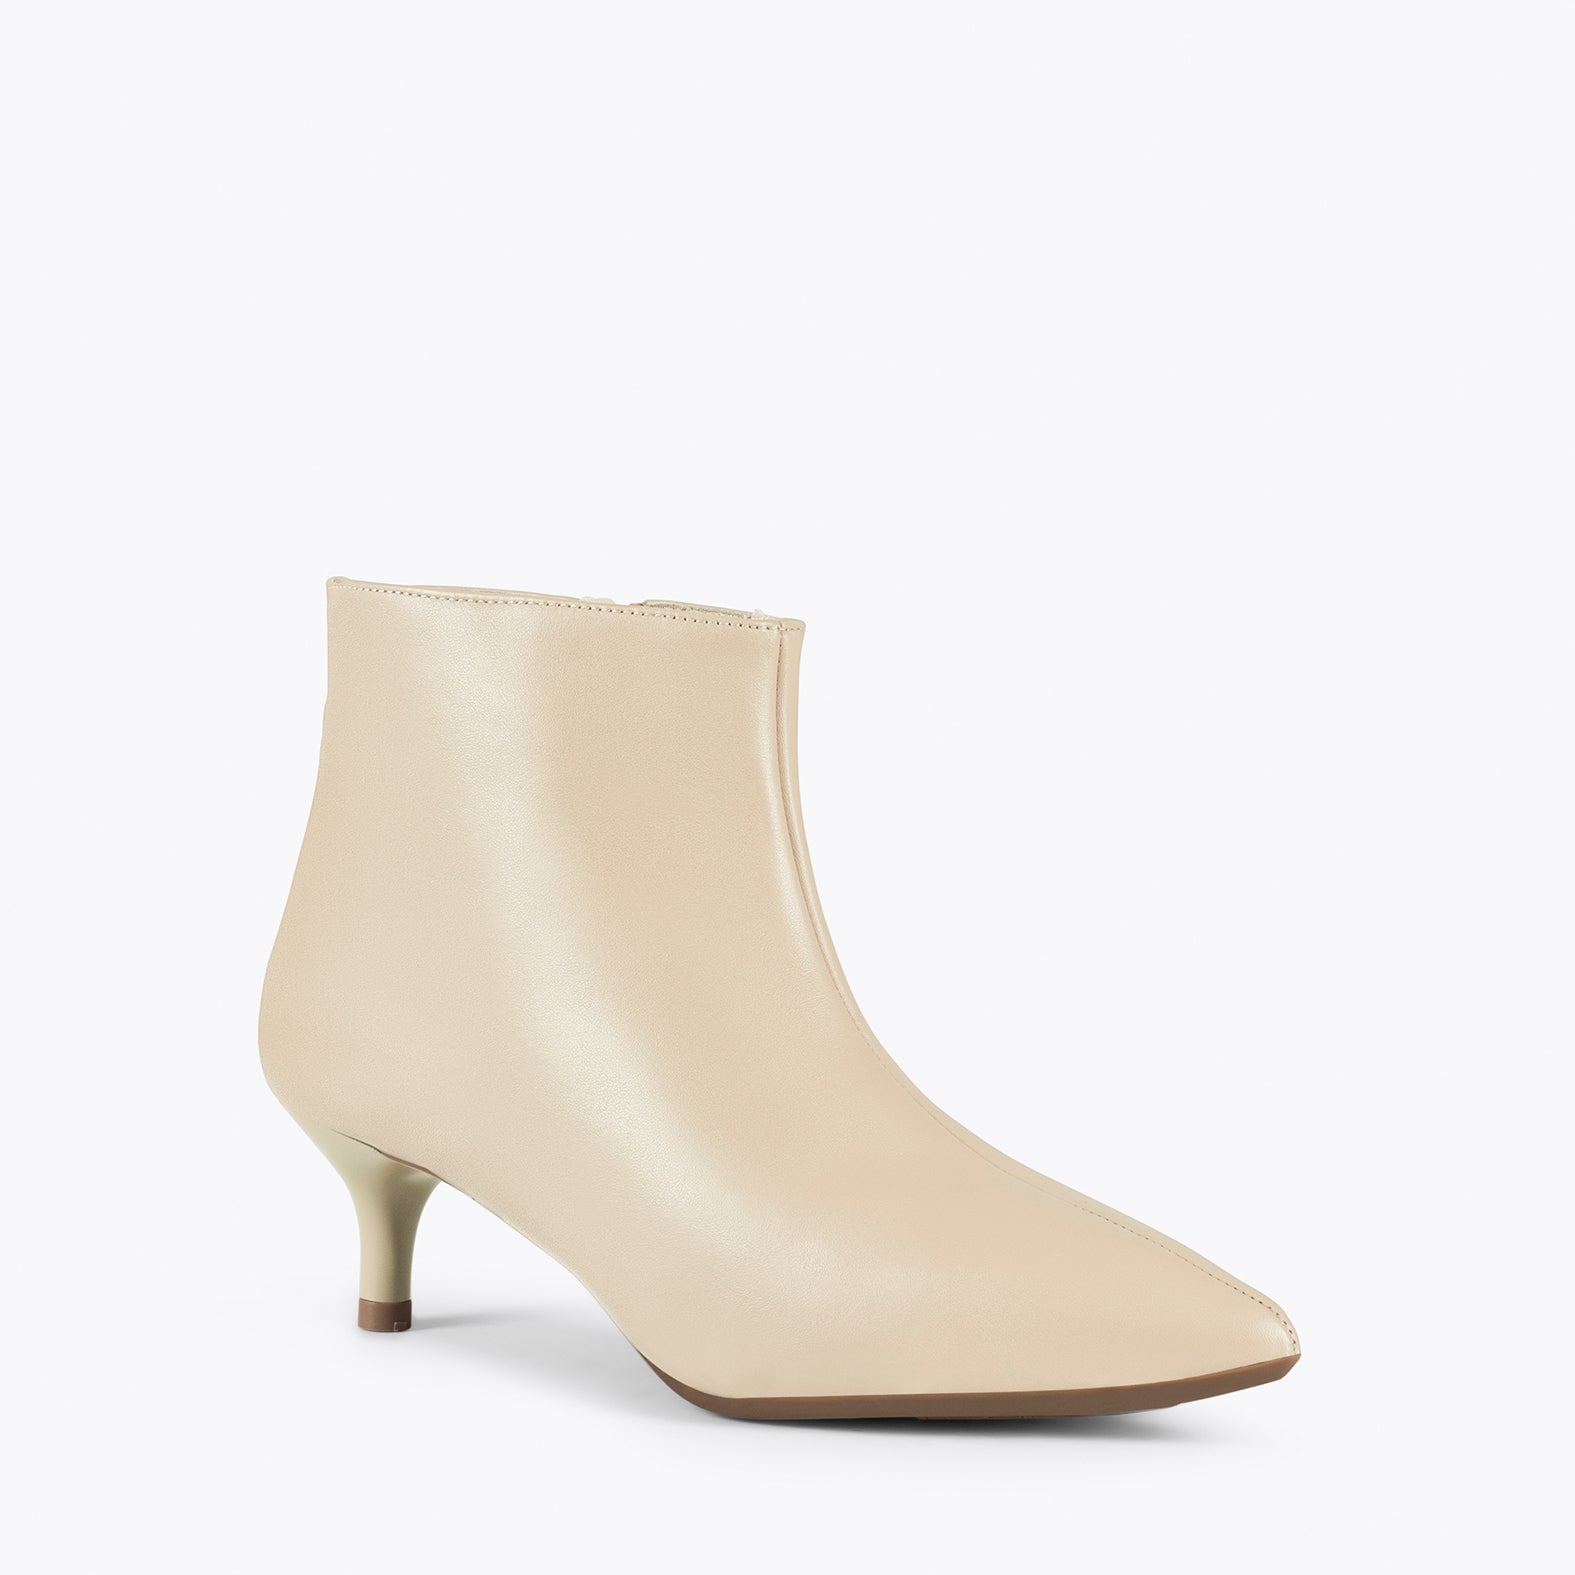 OUTFIT – WHITE elegant low heel booties